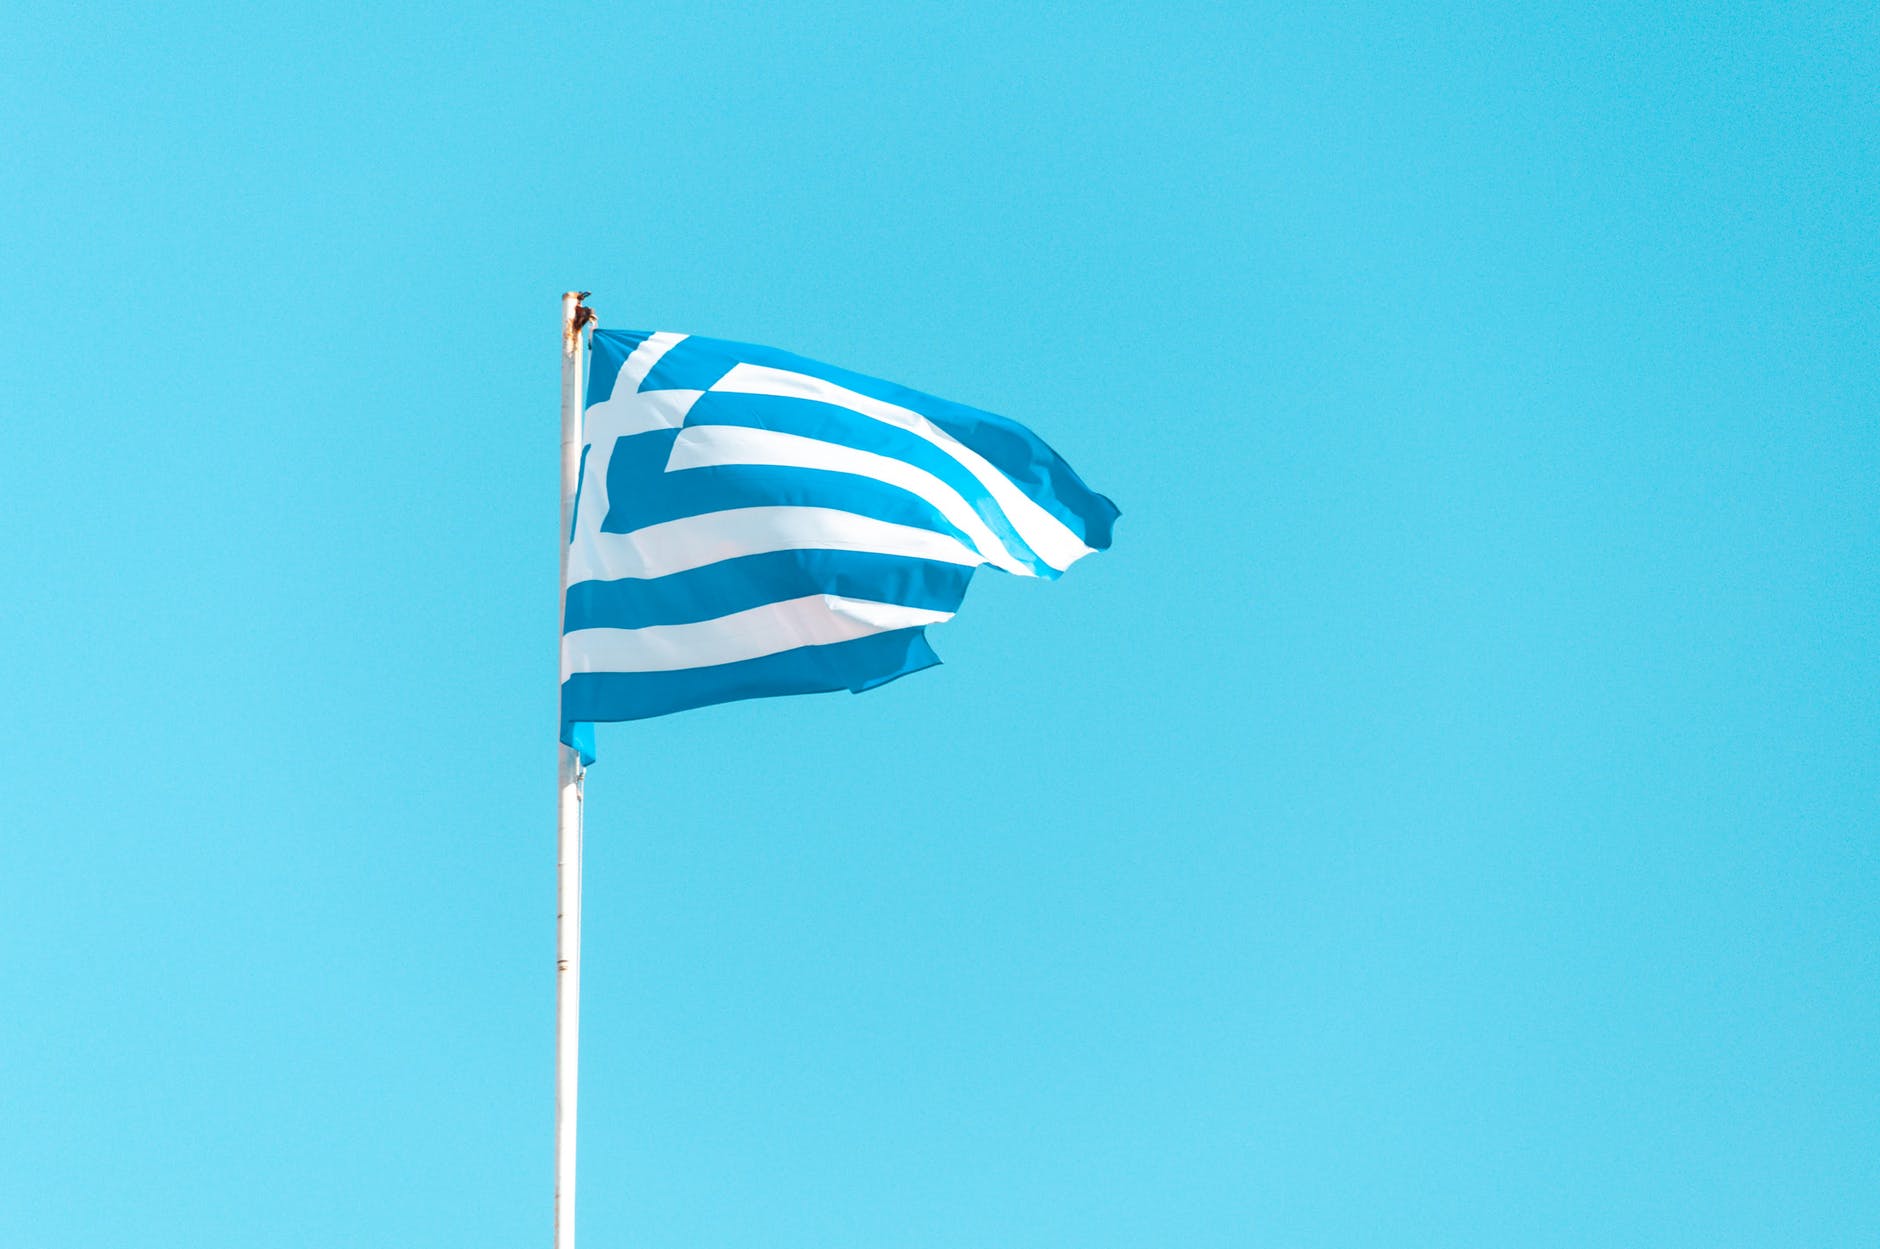 flag of greece